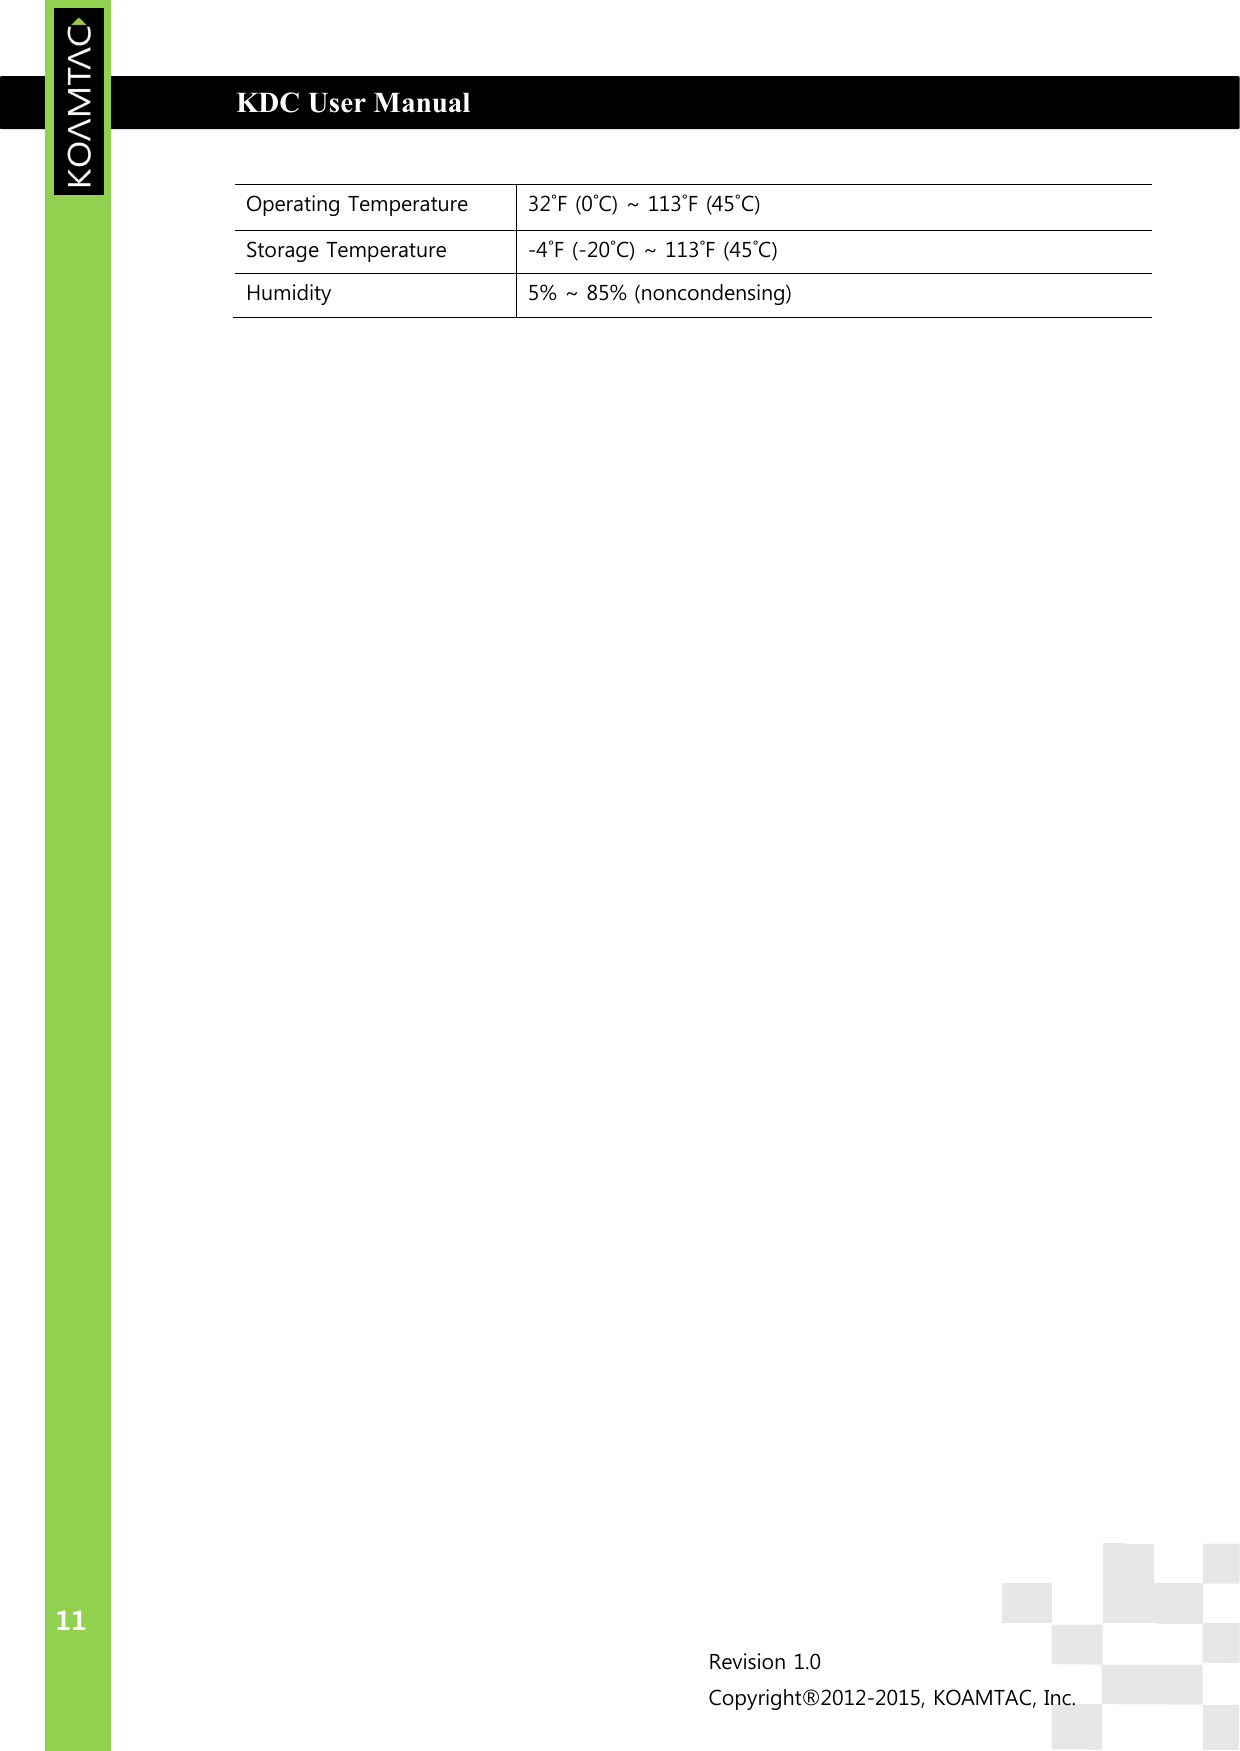  KDC User Manual                                                                         INTRODUCTION 11 Revision 1.0 Copyright®2012-2015, KOAMTAC, Inc.  Operating Temperature  32˚F (0˚C) ~ 113˚F (45˚C) Storage Temperature  -4˚F (-20˚C) ~ 113˚F (45˚C) Humidity  5% ~ 85% (noncondensing)     